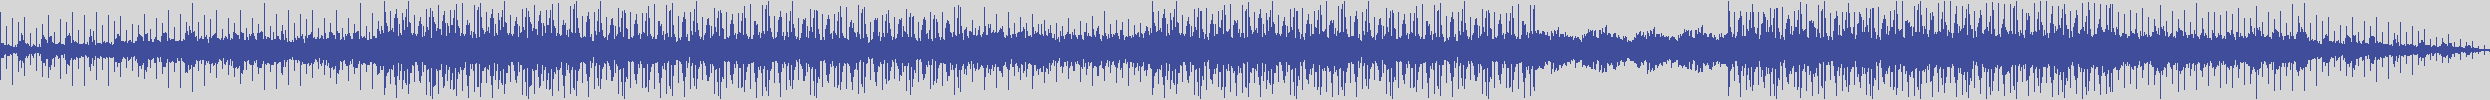 noclouds_chillout [NOC031] Cut Groove - Yedeka [Original Mix] audio wave form